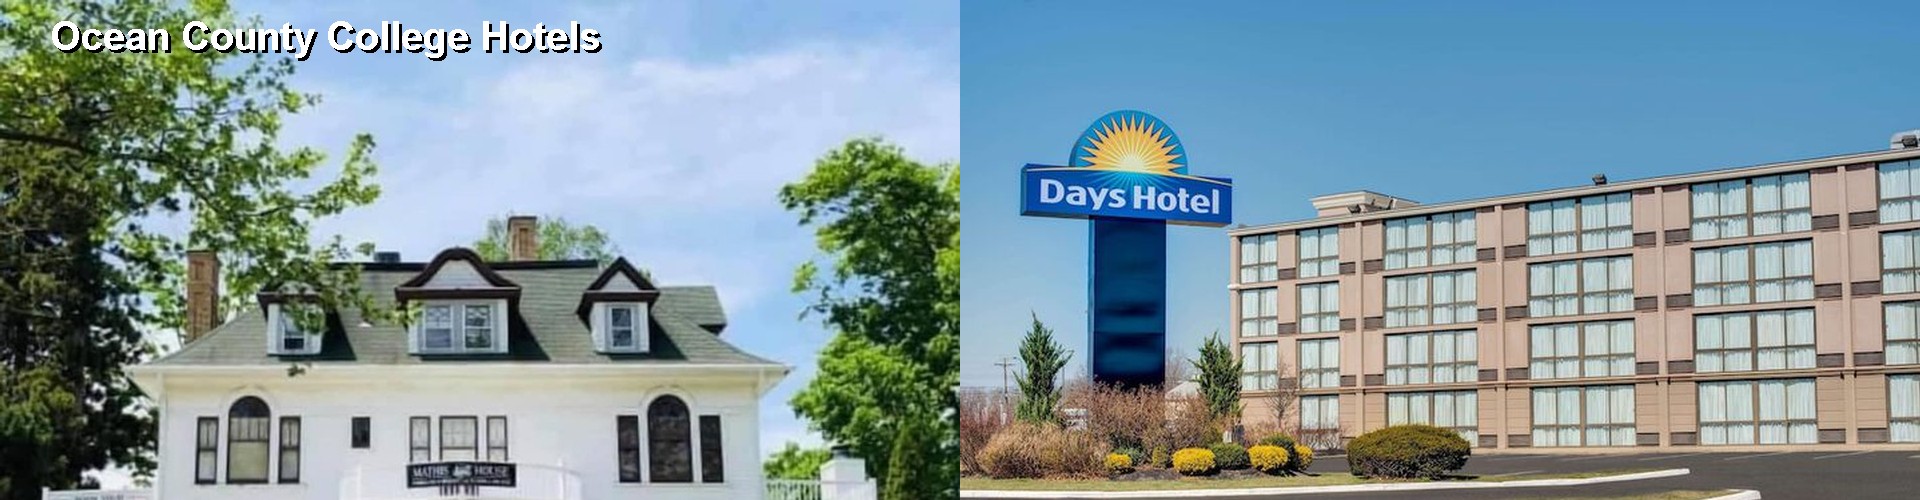 3 Best Hotels near Ocean County College